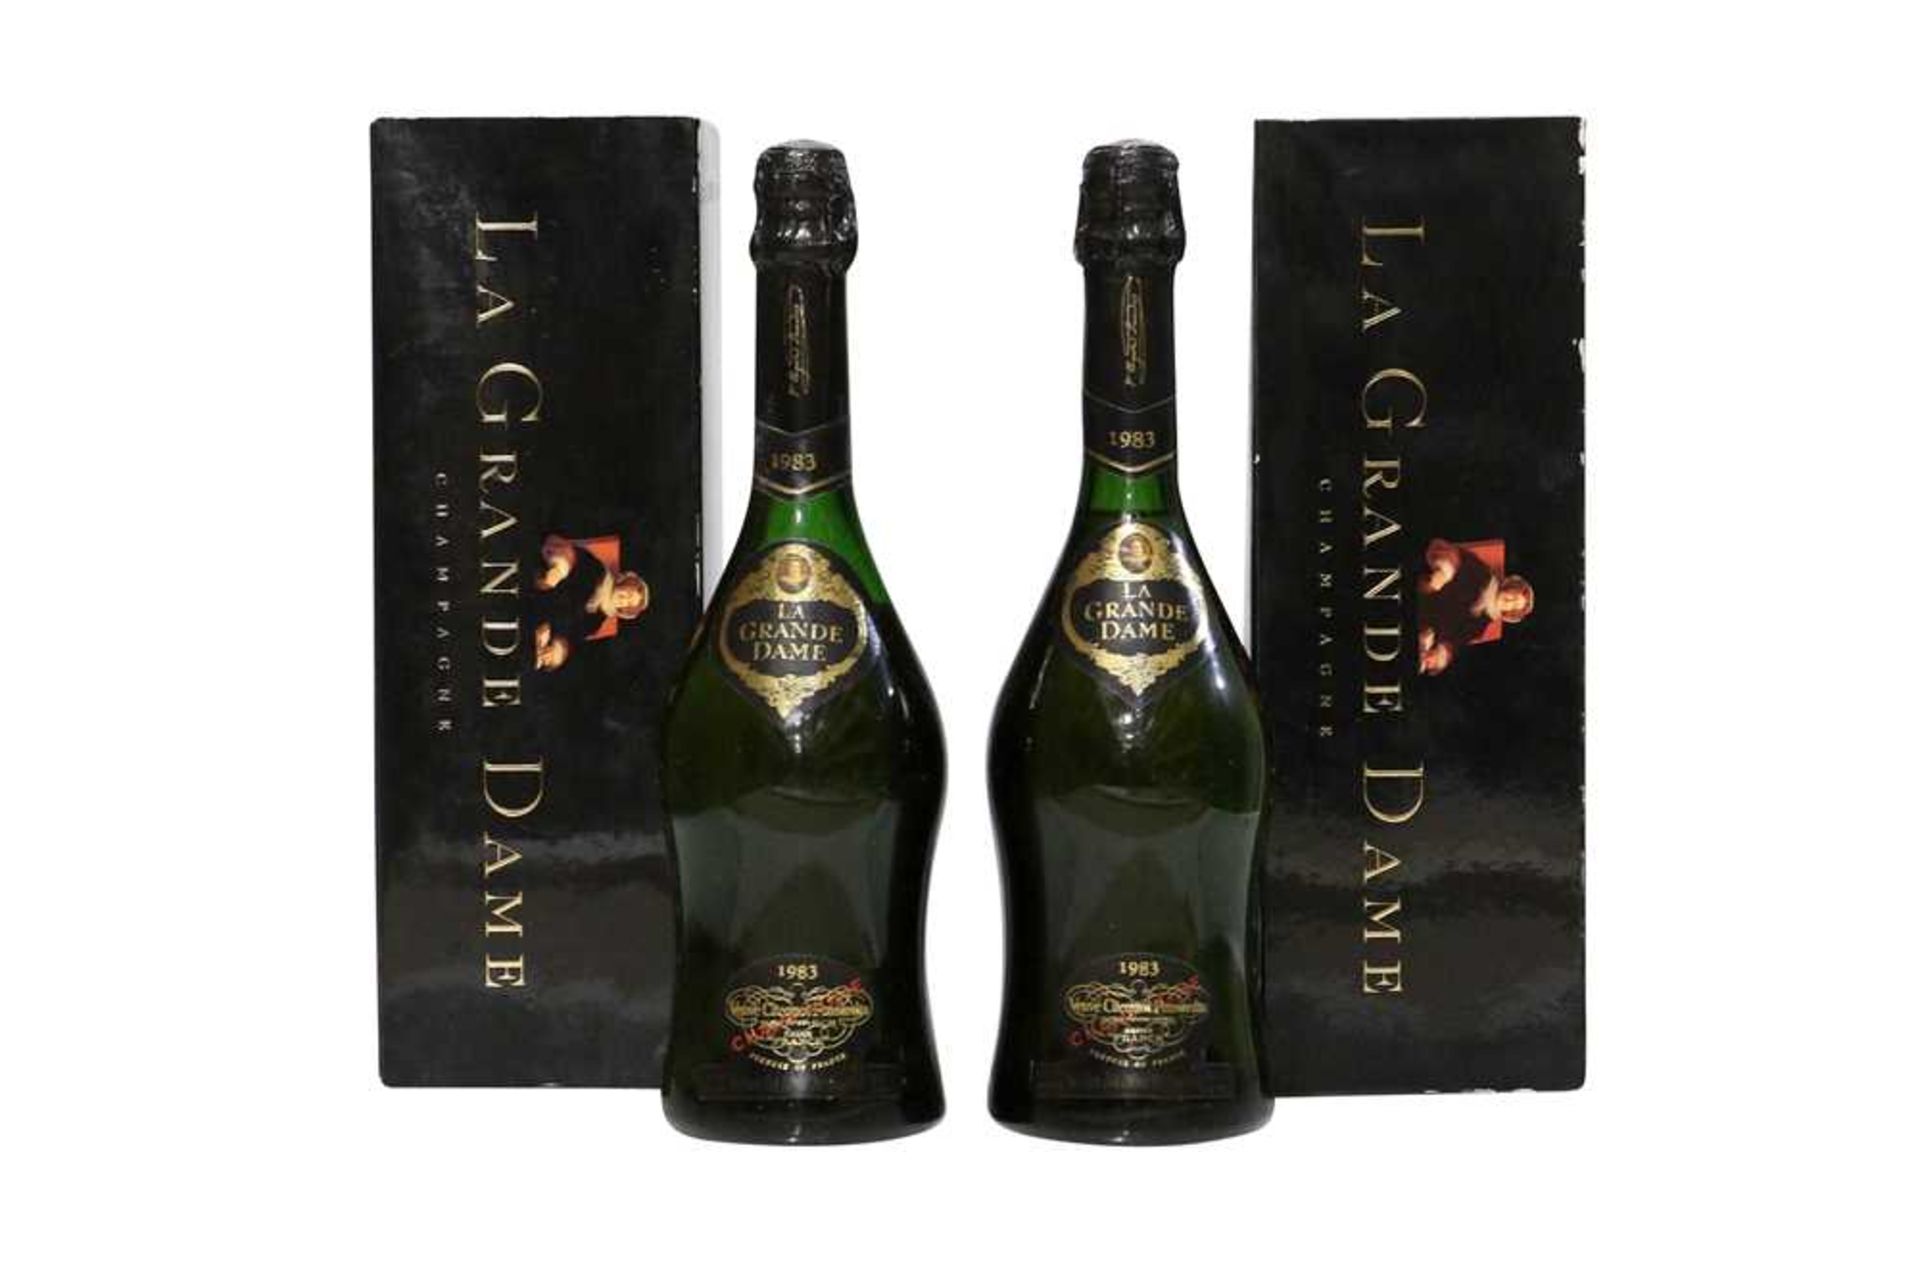 Veuve Clicquot Ponsardin, La Grande Dame, Reims, 1983, two bottles in original boxes